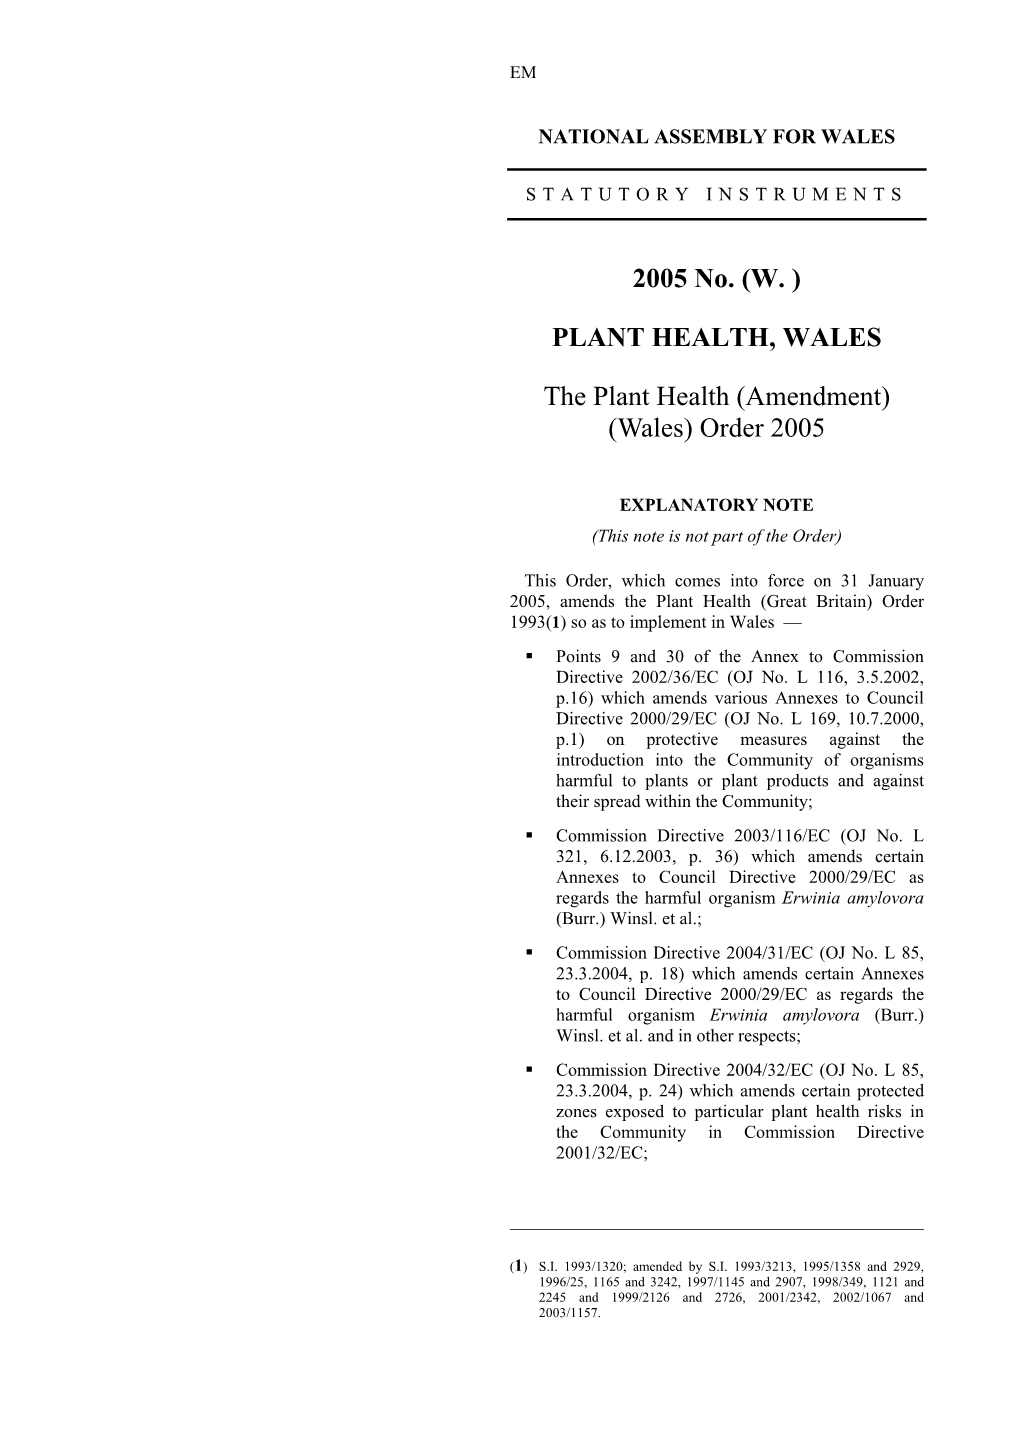 The Plant Health (Amendment) (Wales) Order 2005